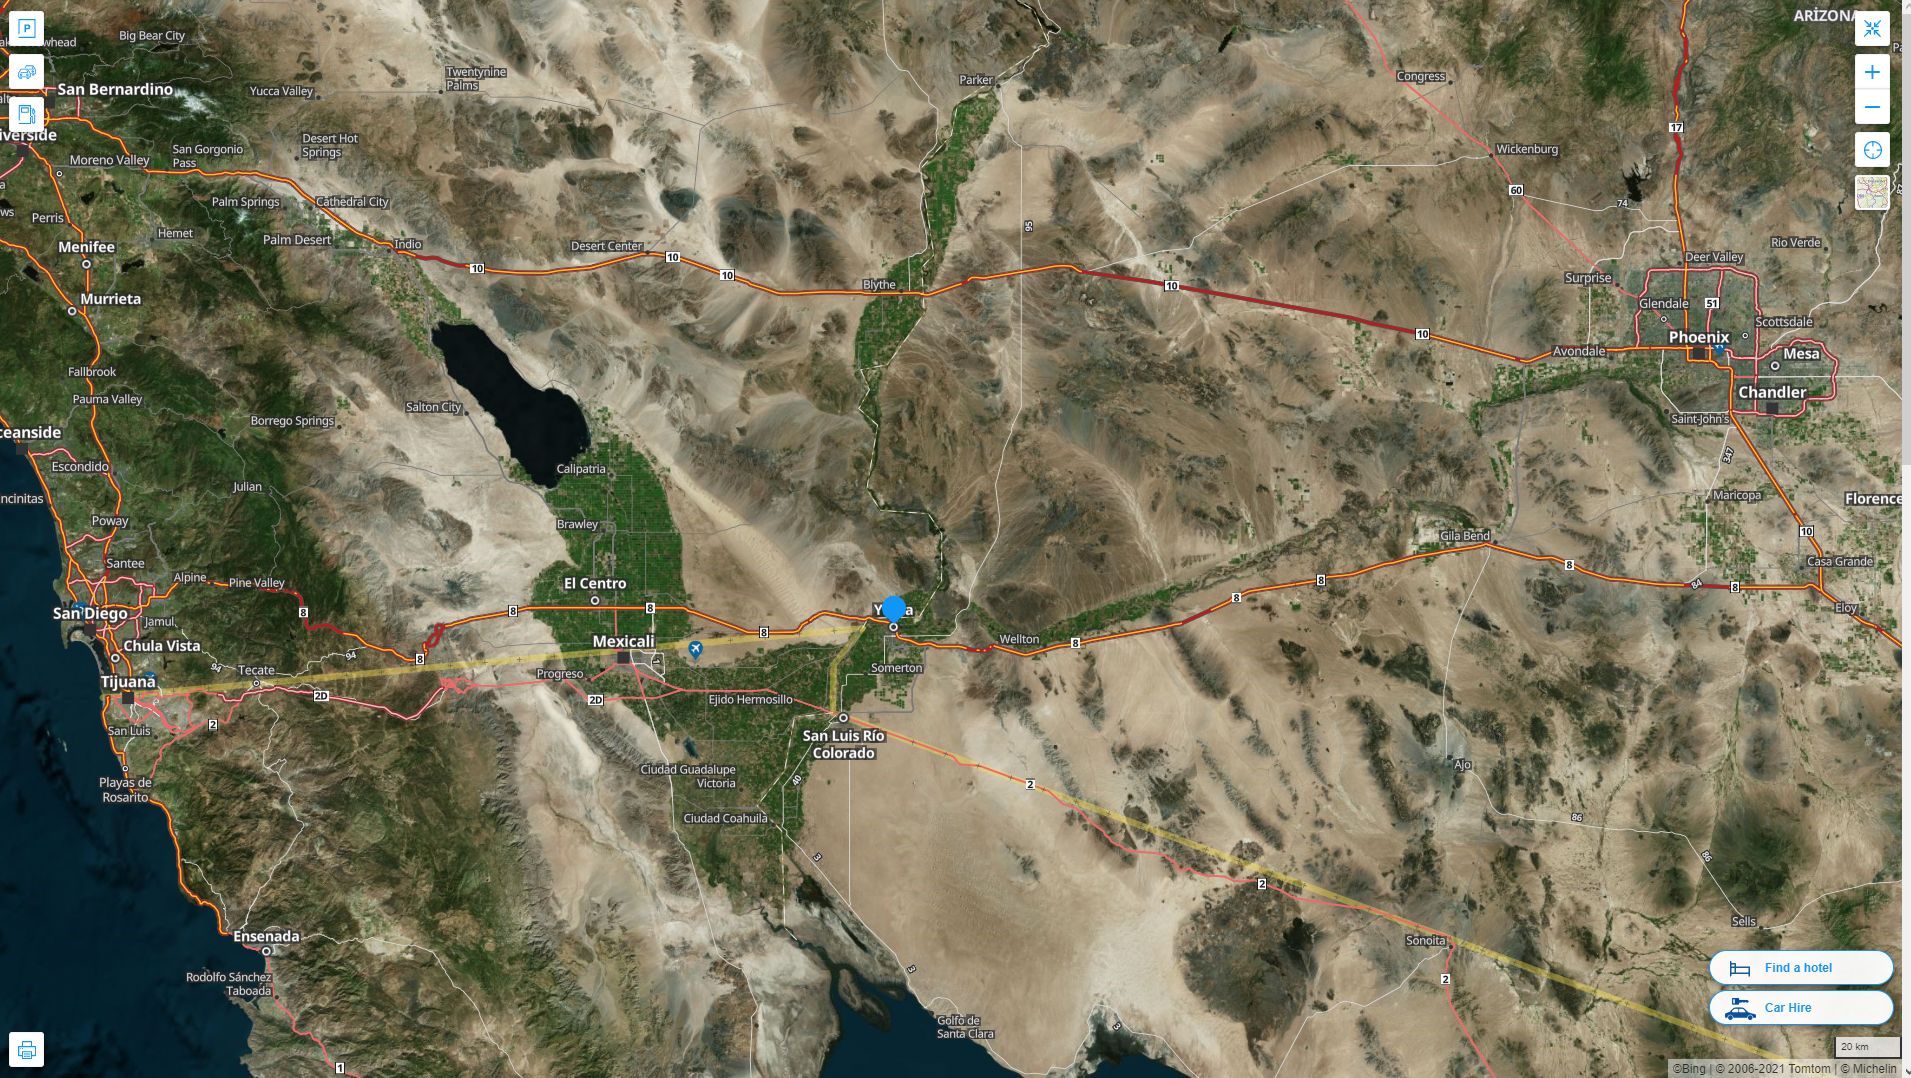 Yuma Arizona Highway and Road Map with Satellite View